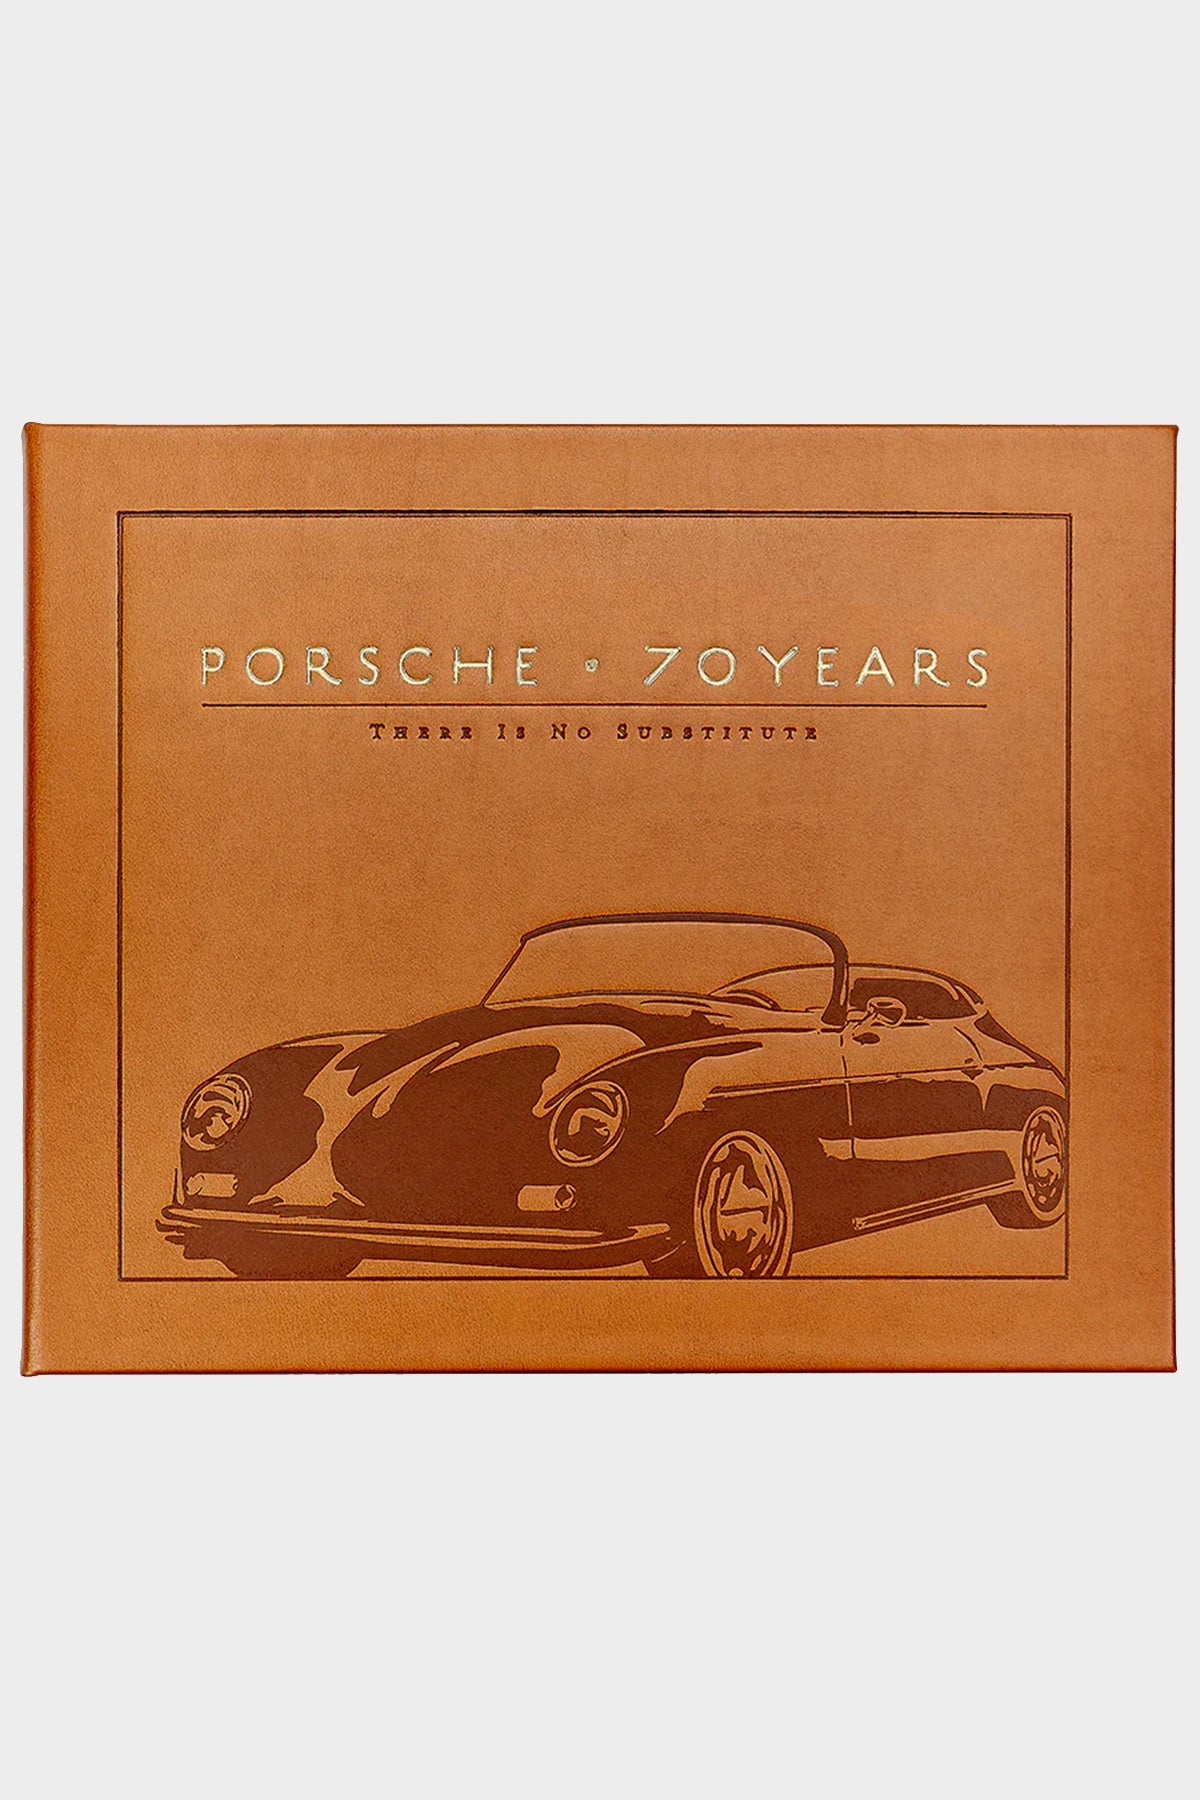 Porsche 70 Years - shop-olivia.com